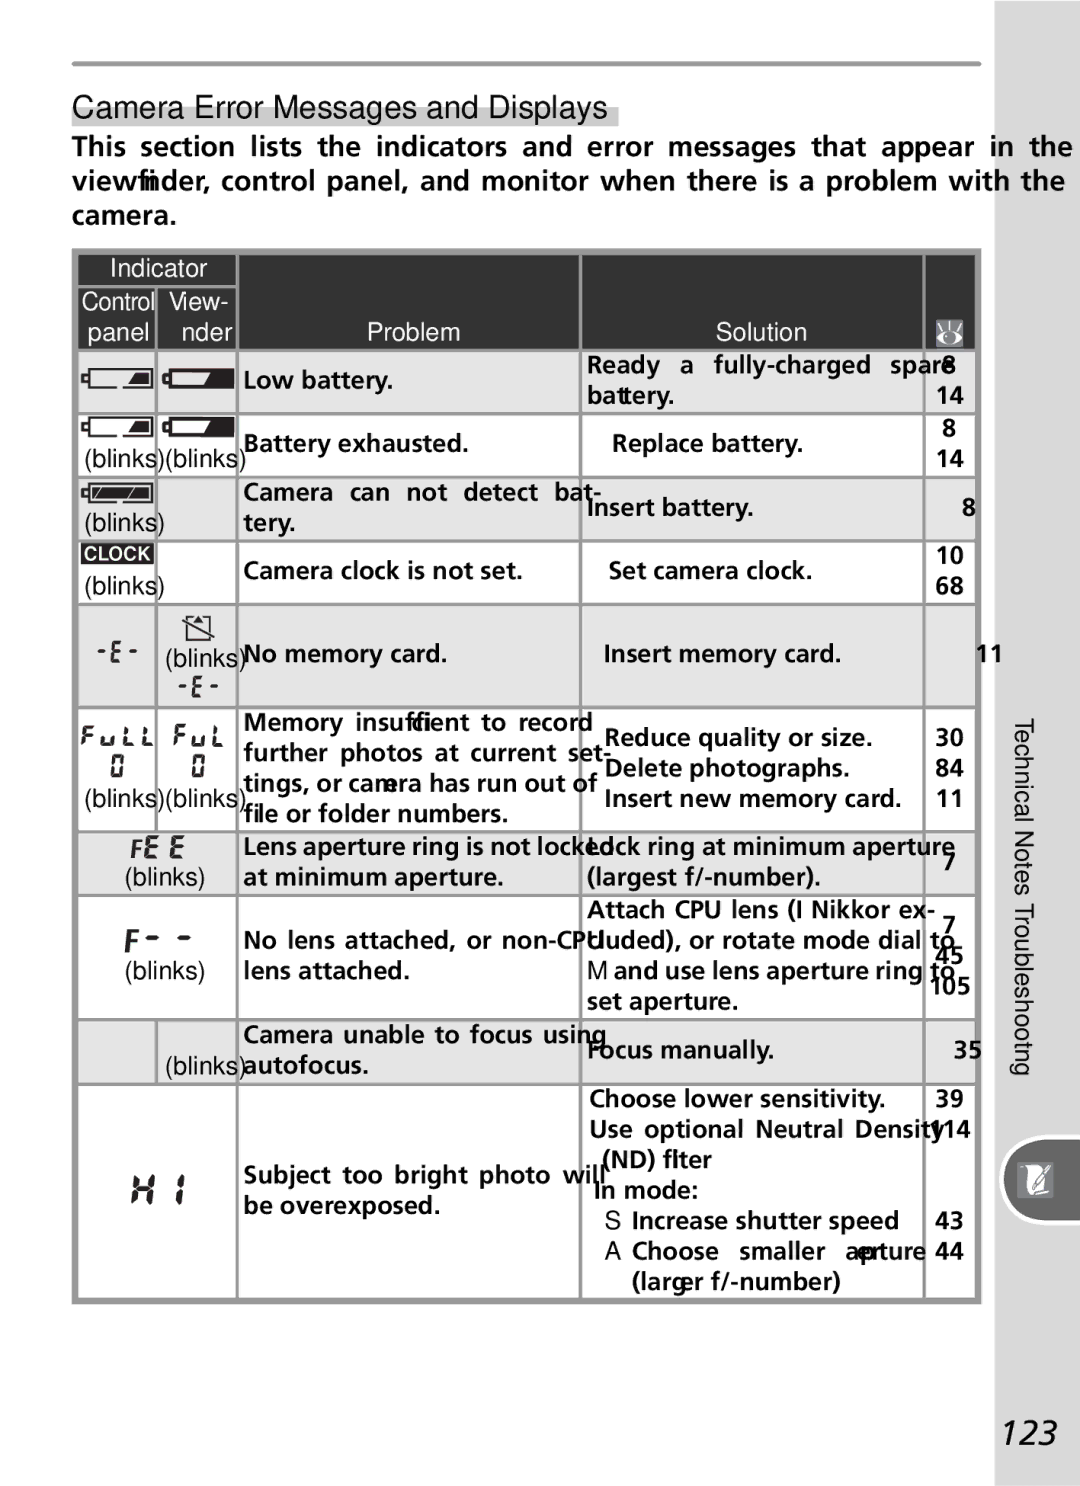 Nikon D50 manual 123, Camera Error Messages and Displays, Indicator 